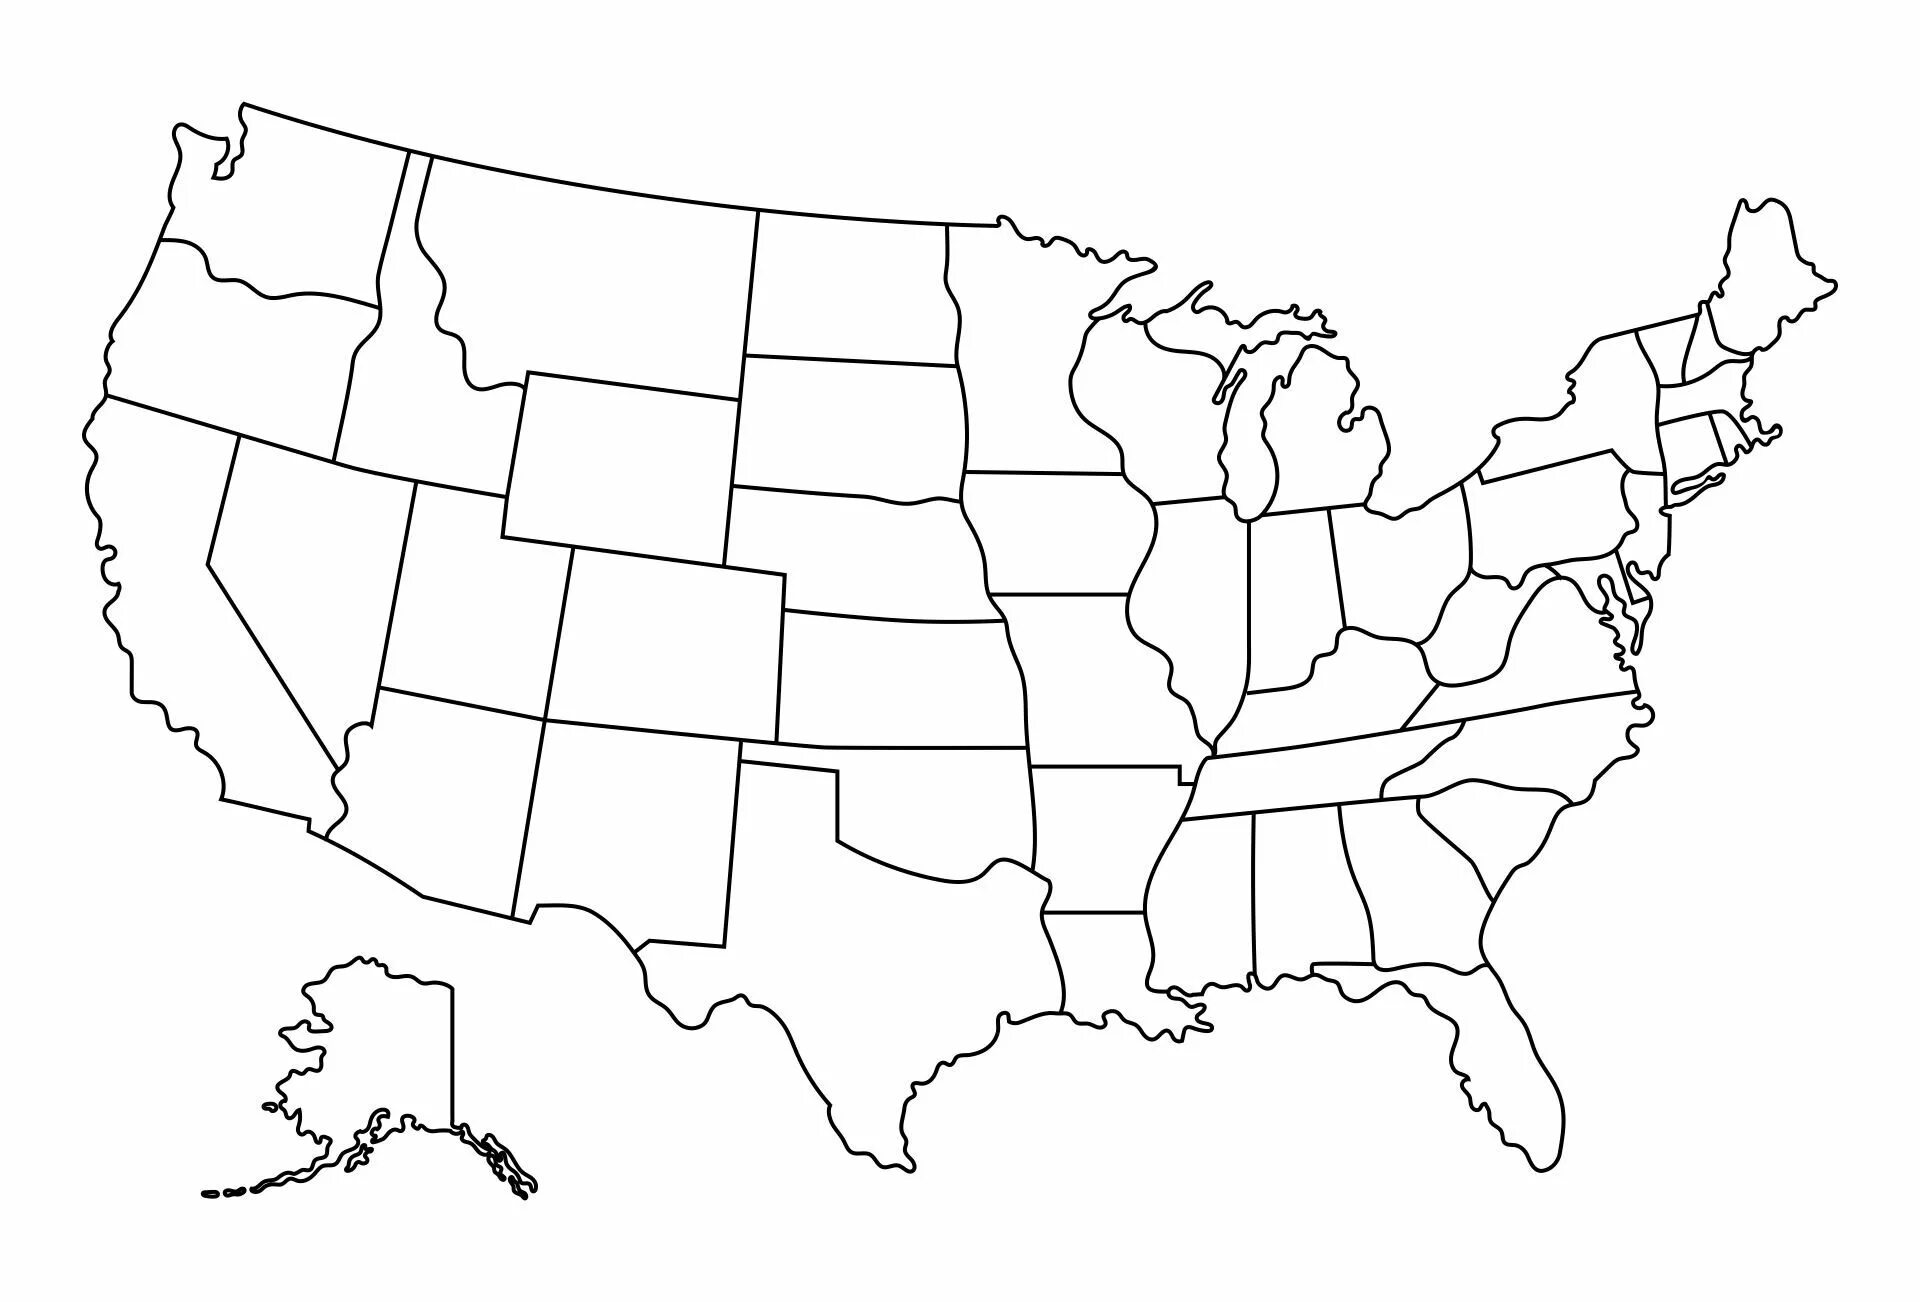 Карта США со Штатами. Контурная карта Штатов США. Северная Америка контурная карта штаты США. Контурная карта Северной Америки со Штатами. White state